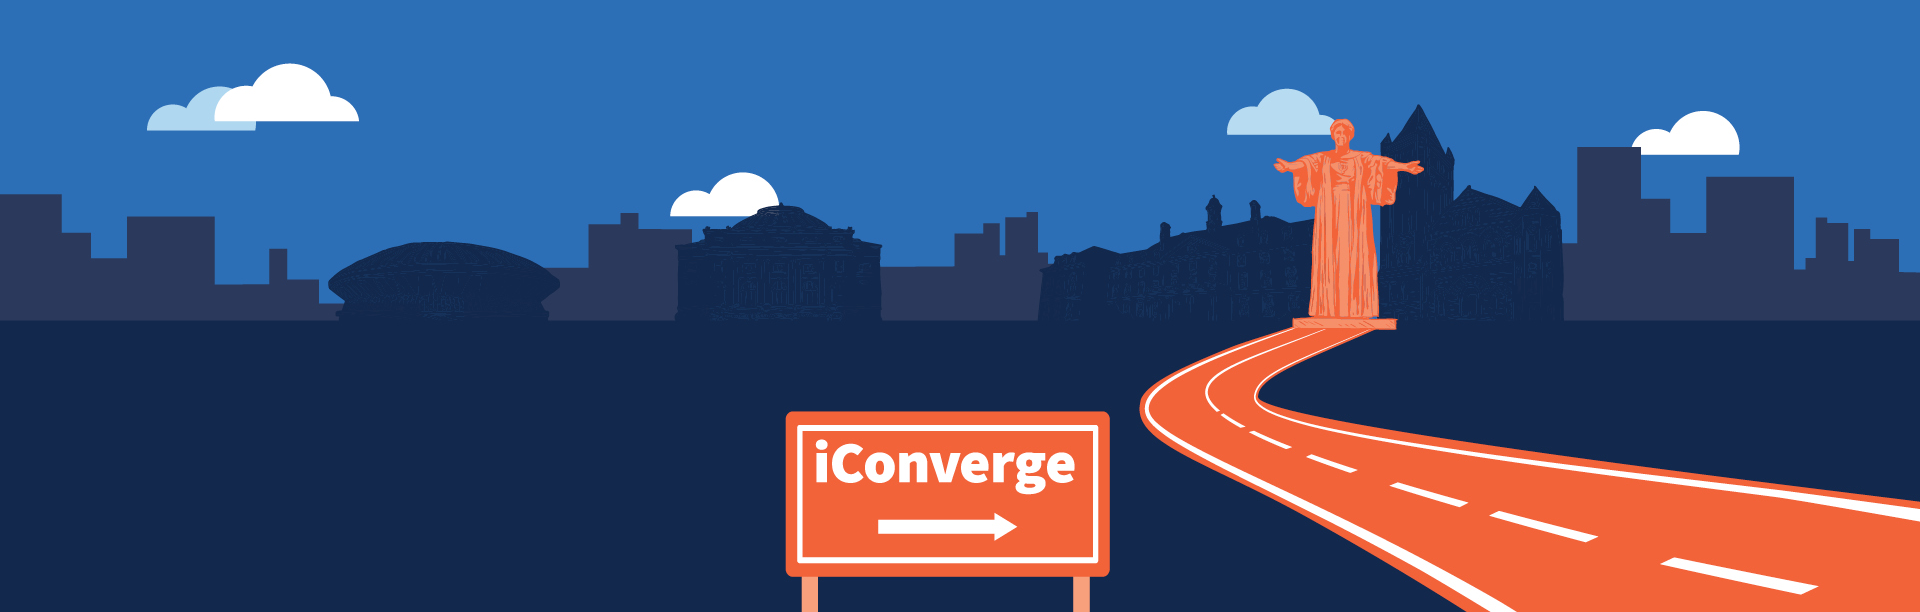 Path to iConverge